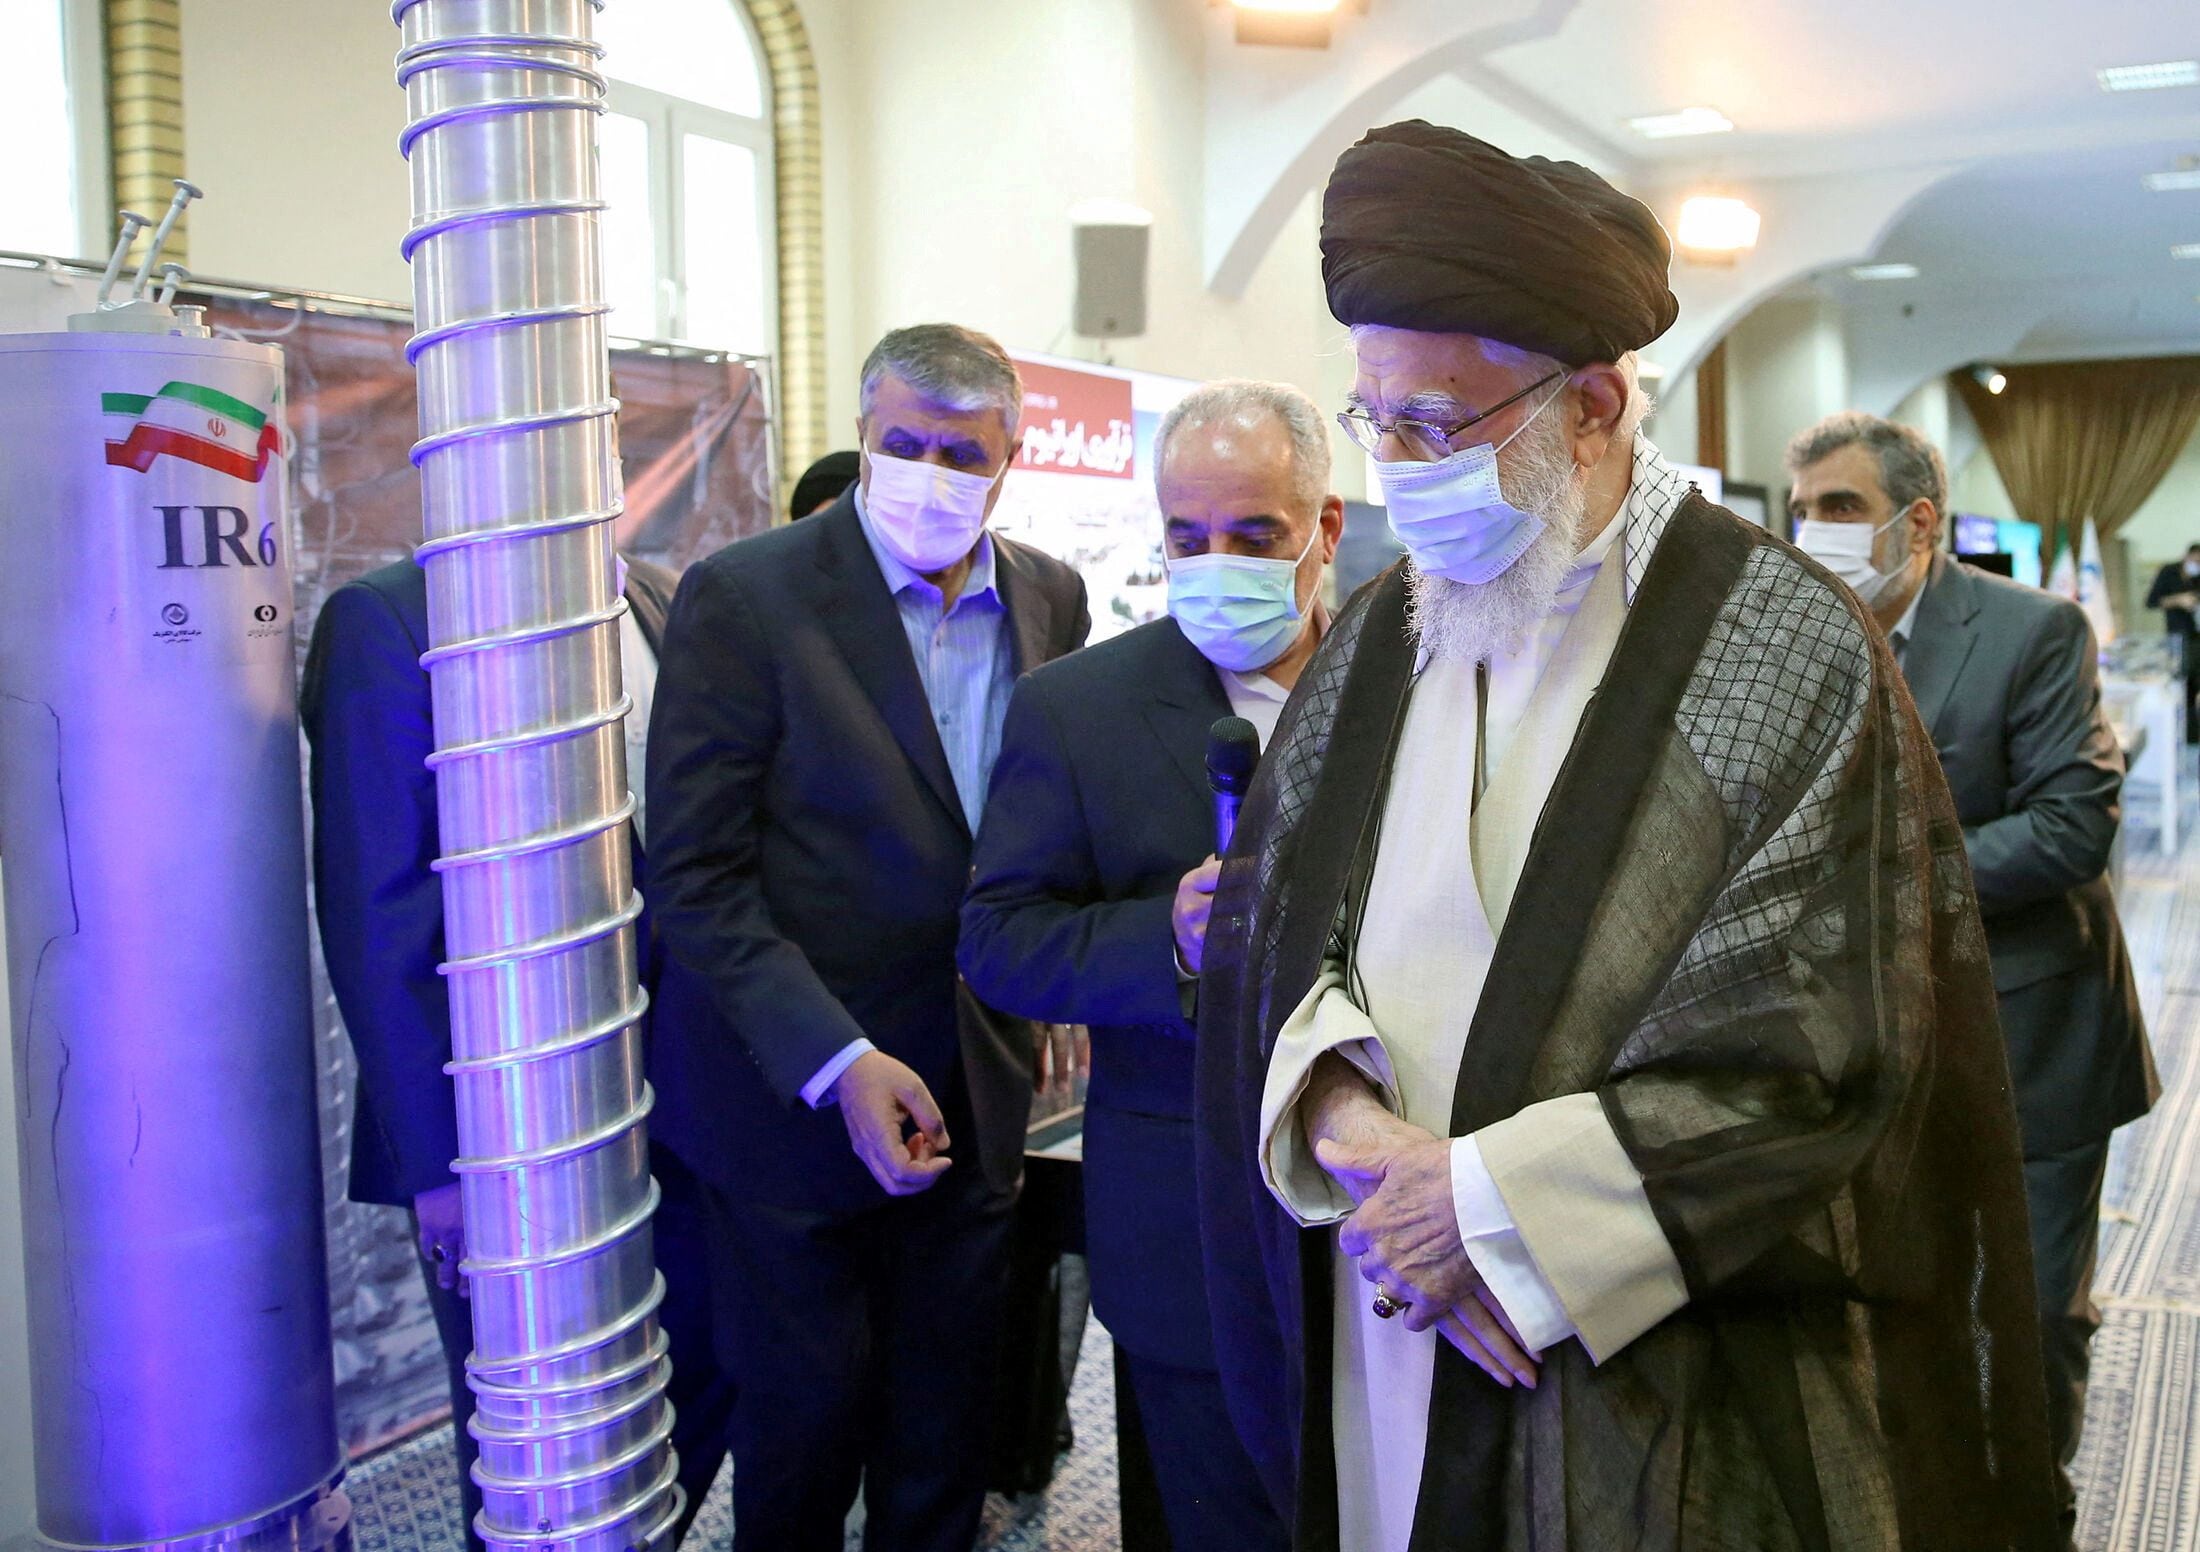 El Ayatollah Ali Khamenei visita centrífugas del programa nuclear iraní (WANA/Reuters)